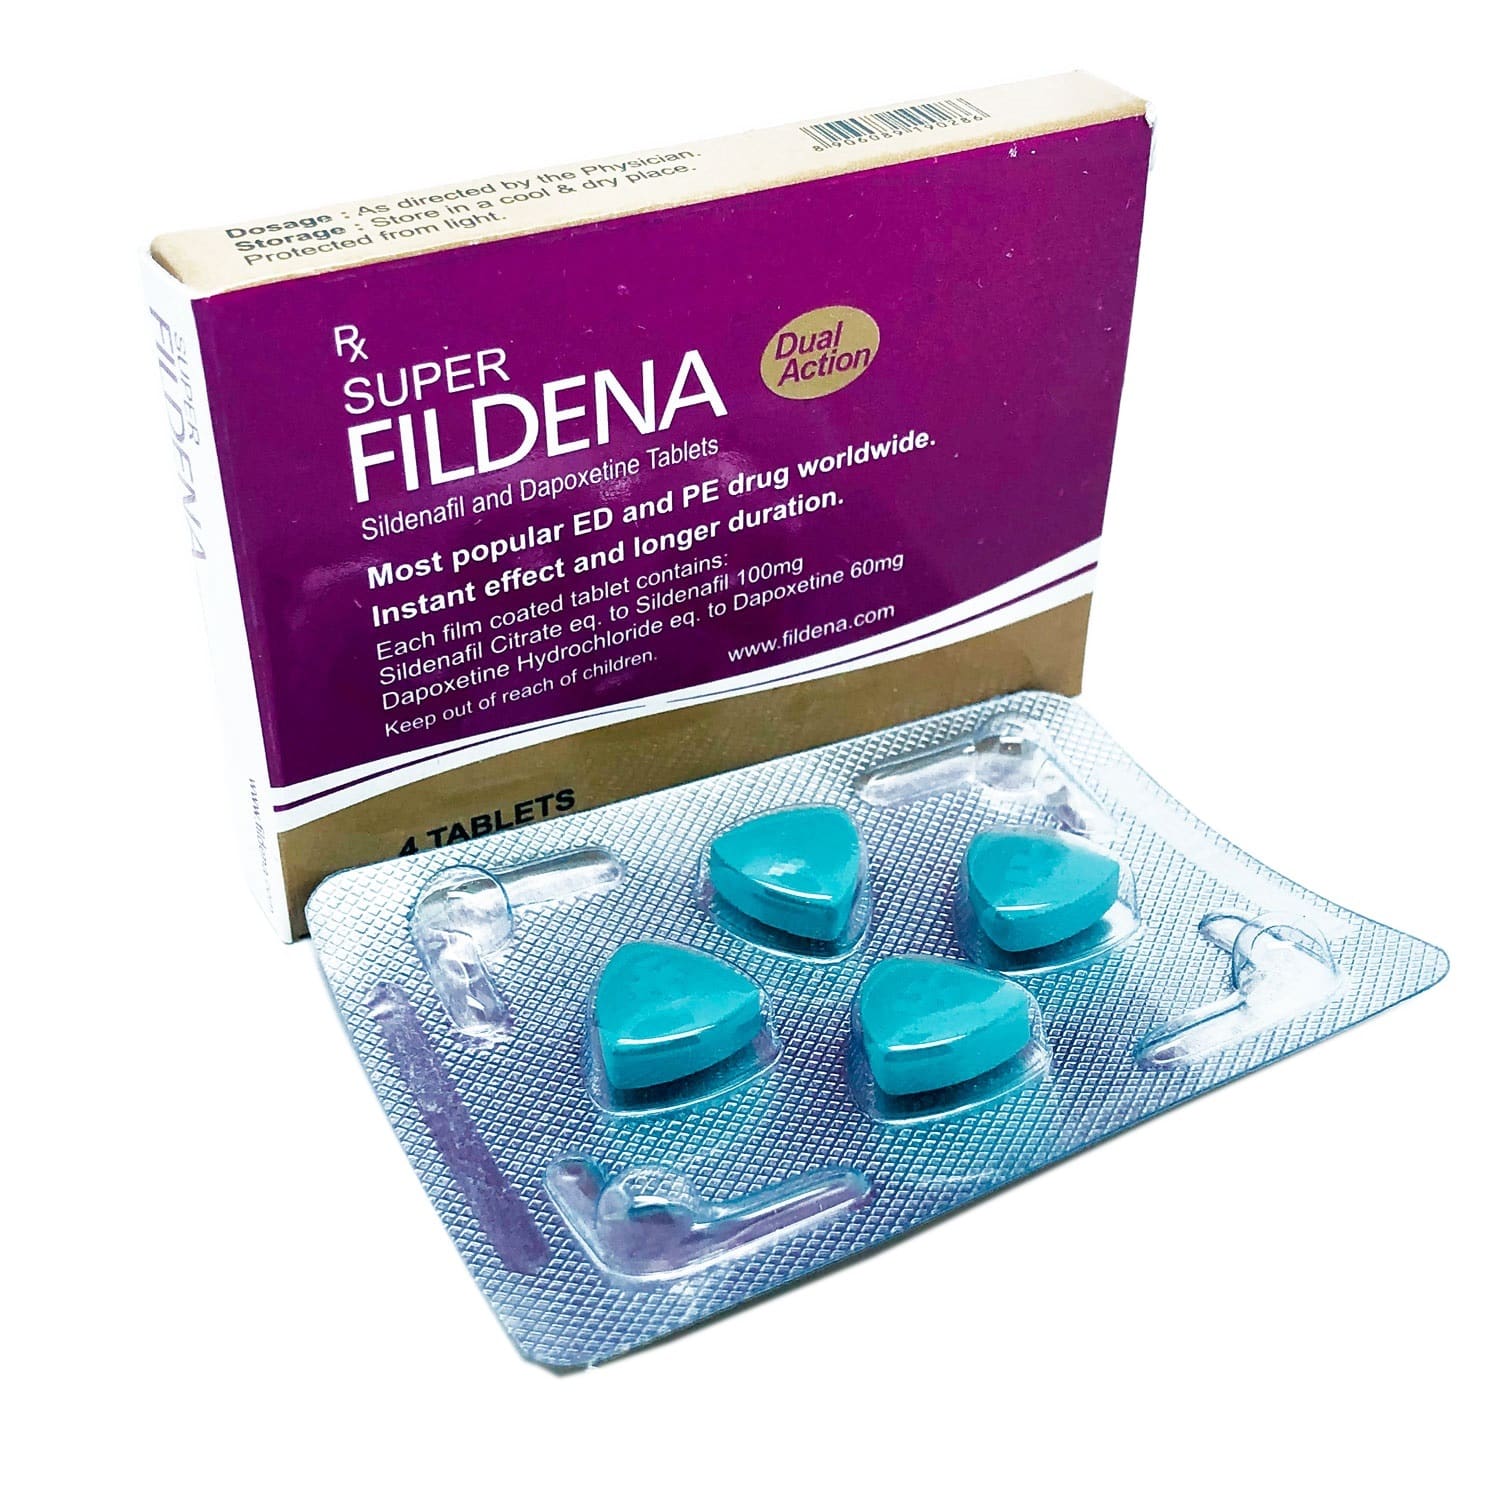 Super Fildena (Sildenafil + Dapoxetine) Tablets Online | Reviews, Side Effects